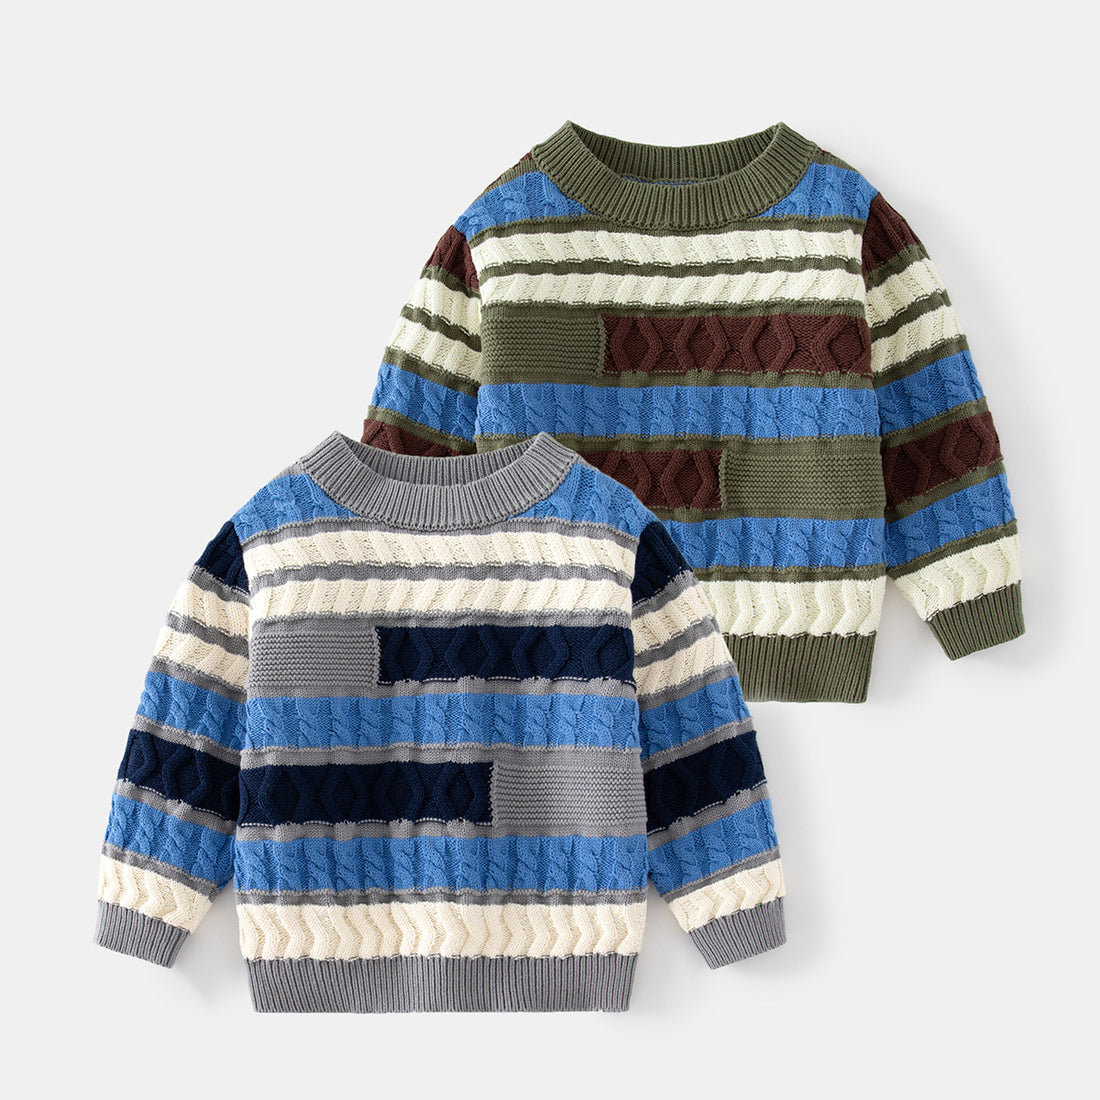 [513697] - Atasan Sweater Rajut Lengan Panjang Import Anak Laki-Laki - Motif Regular Stripe